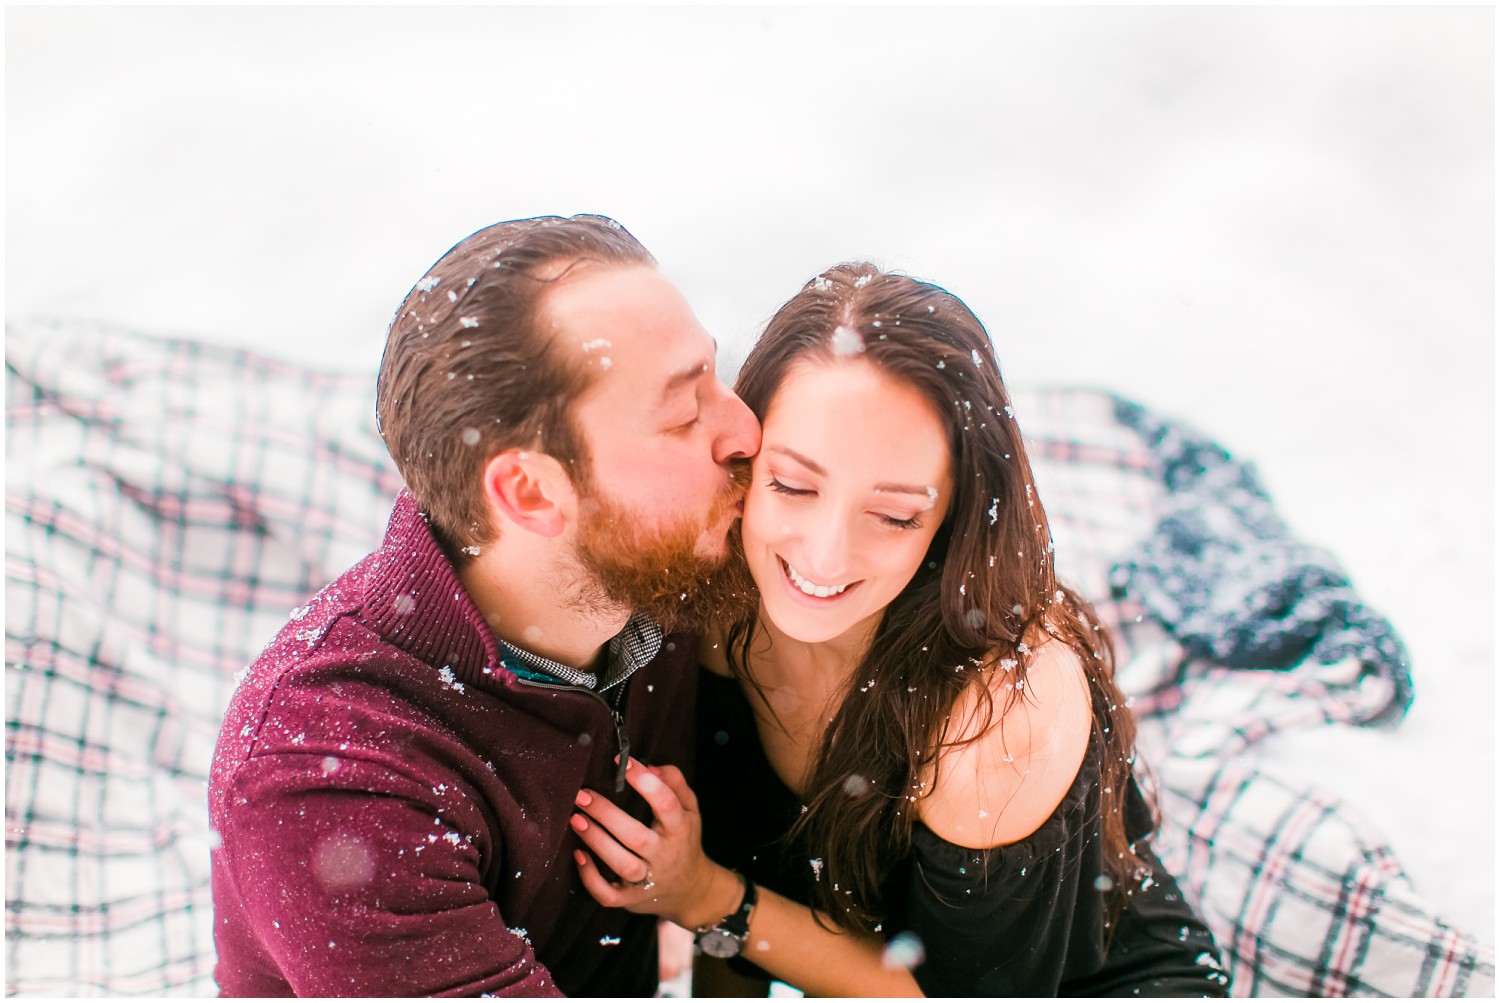 Snowy Alpental Engagement | Cole & Ashley